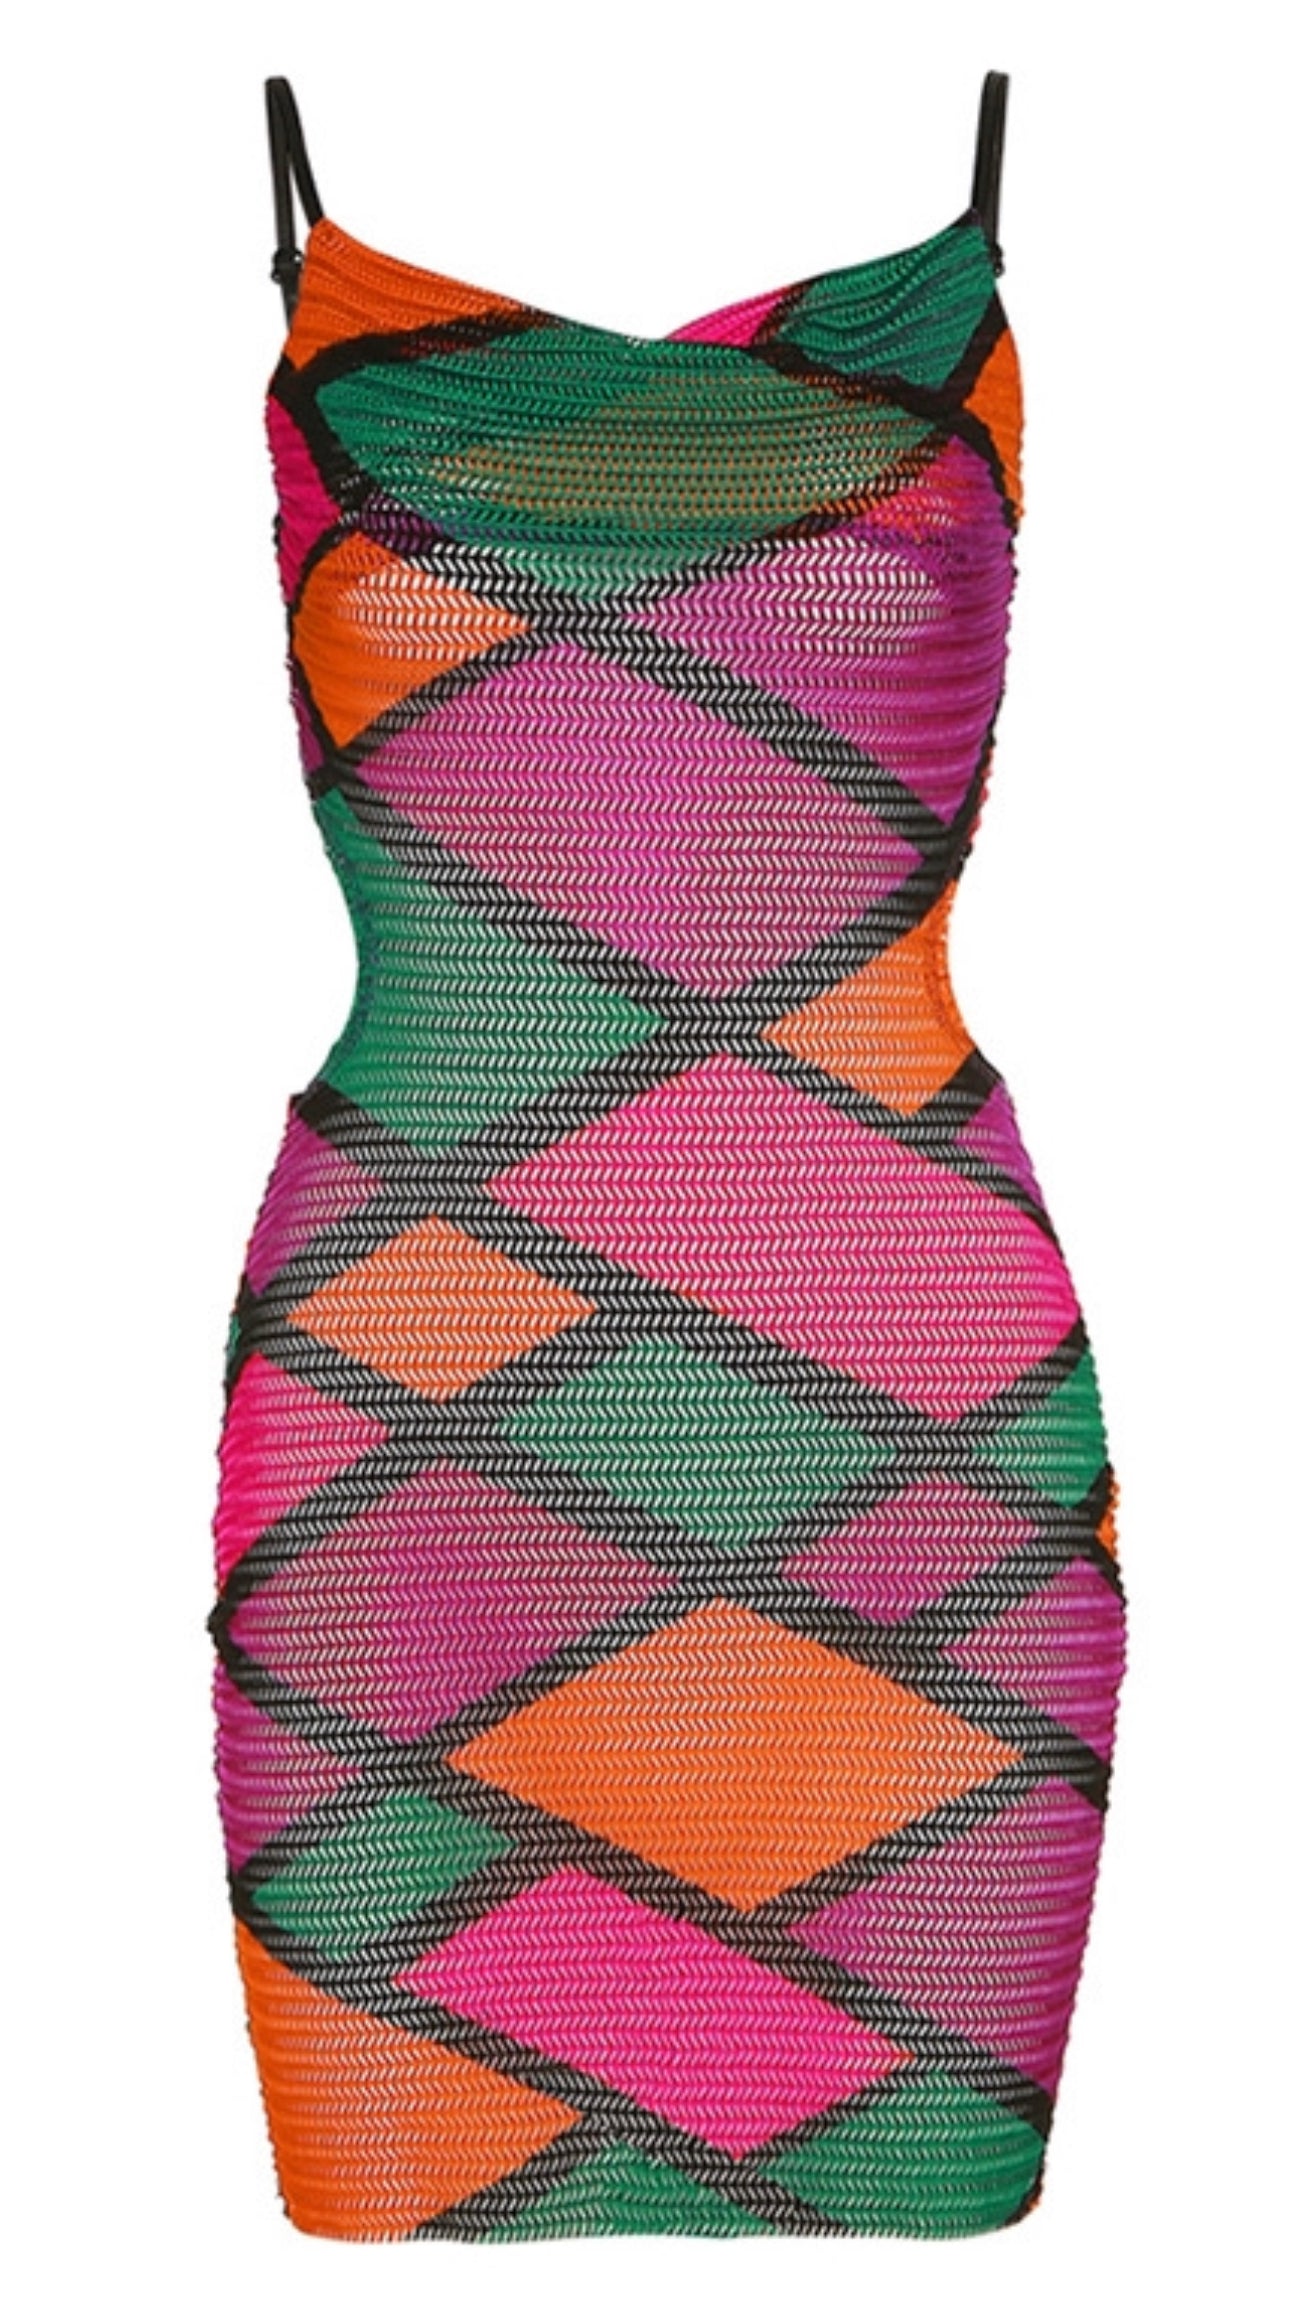 Geometric Print Mesh Fitted Dress